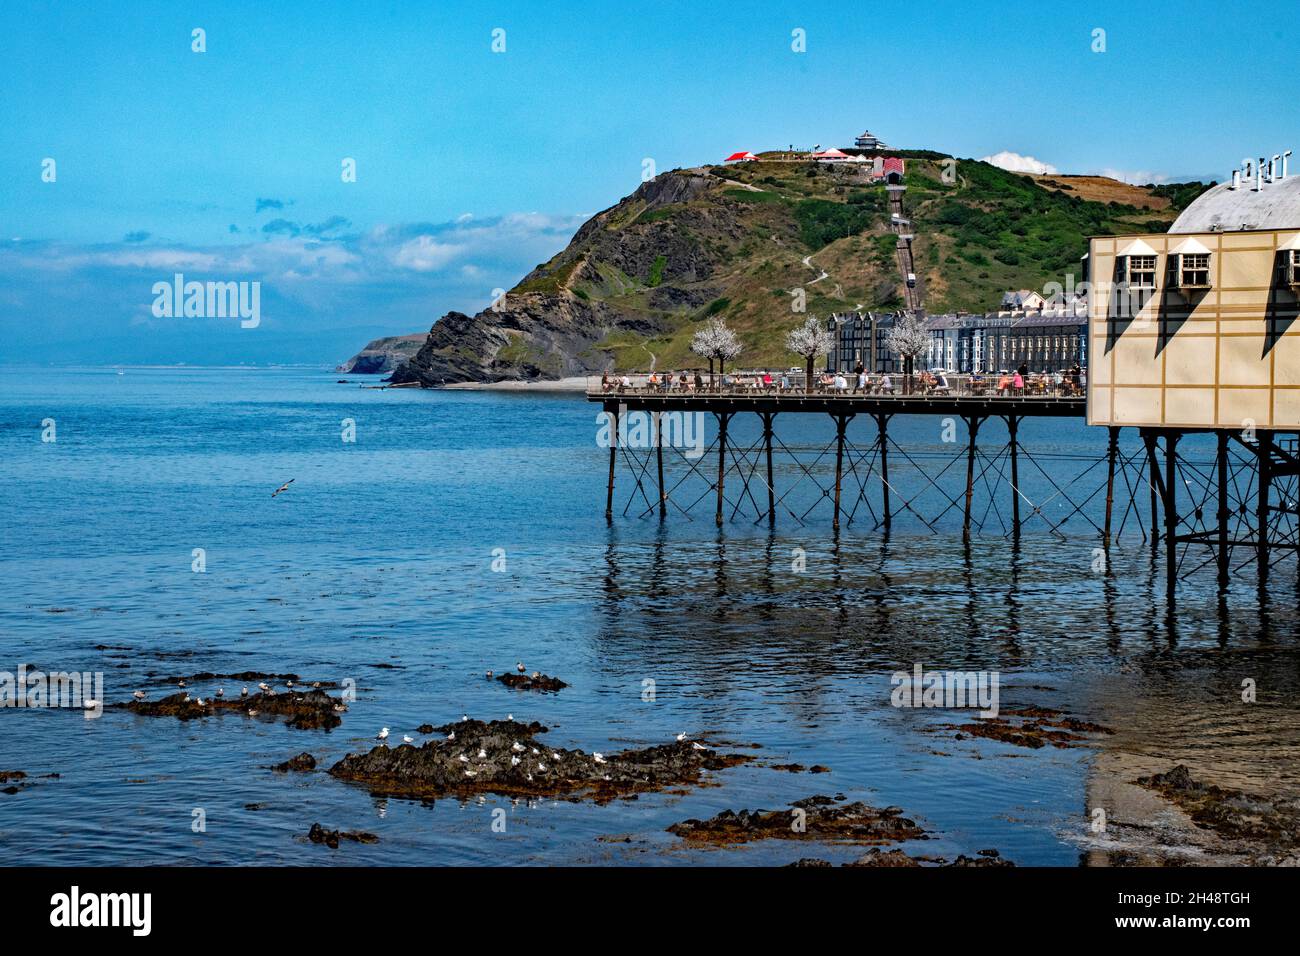 Royal Pier, Marine Terrace, Aberystwyth. MId Wales. UK Stock Photo